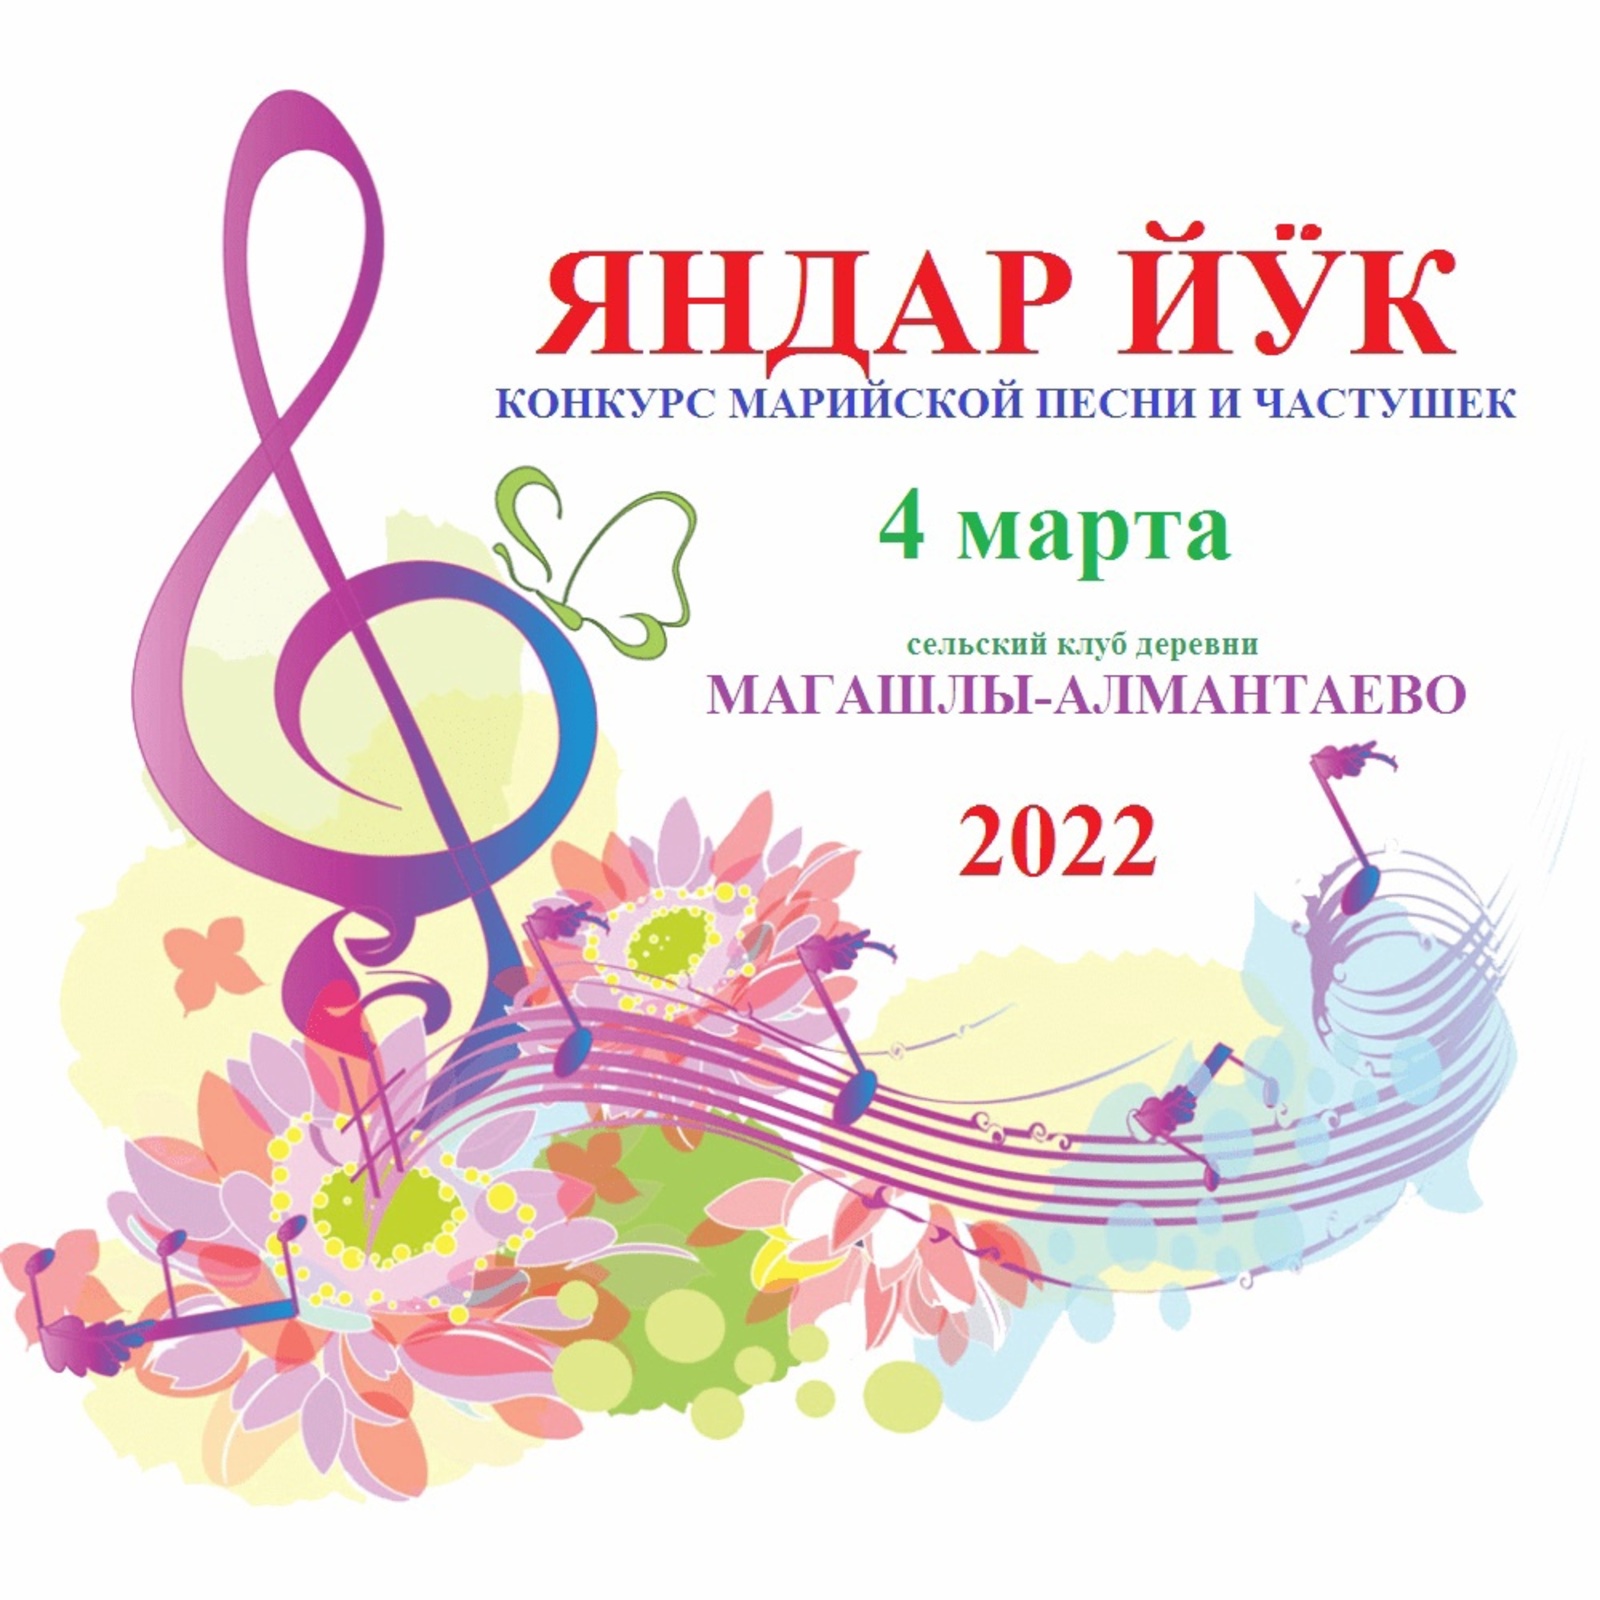 Магашлы – Алмантаевцы приглашают на Гала – концерт победителей  конкурса “Яндар йук 2022”